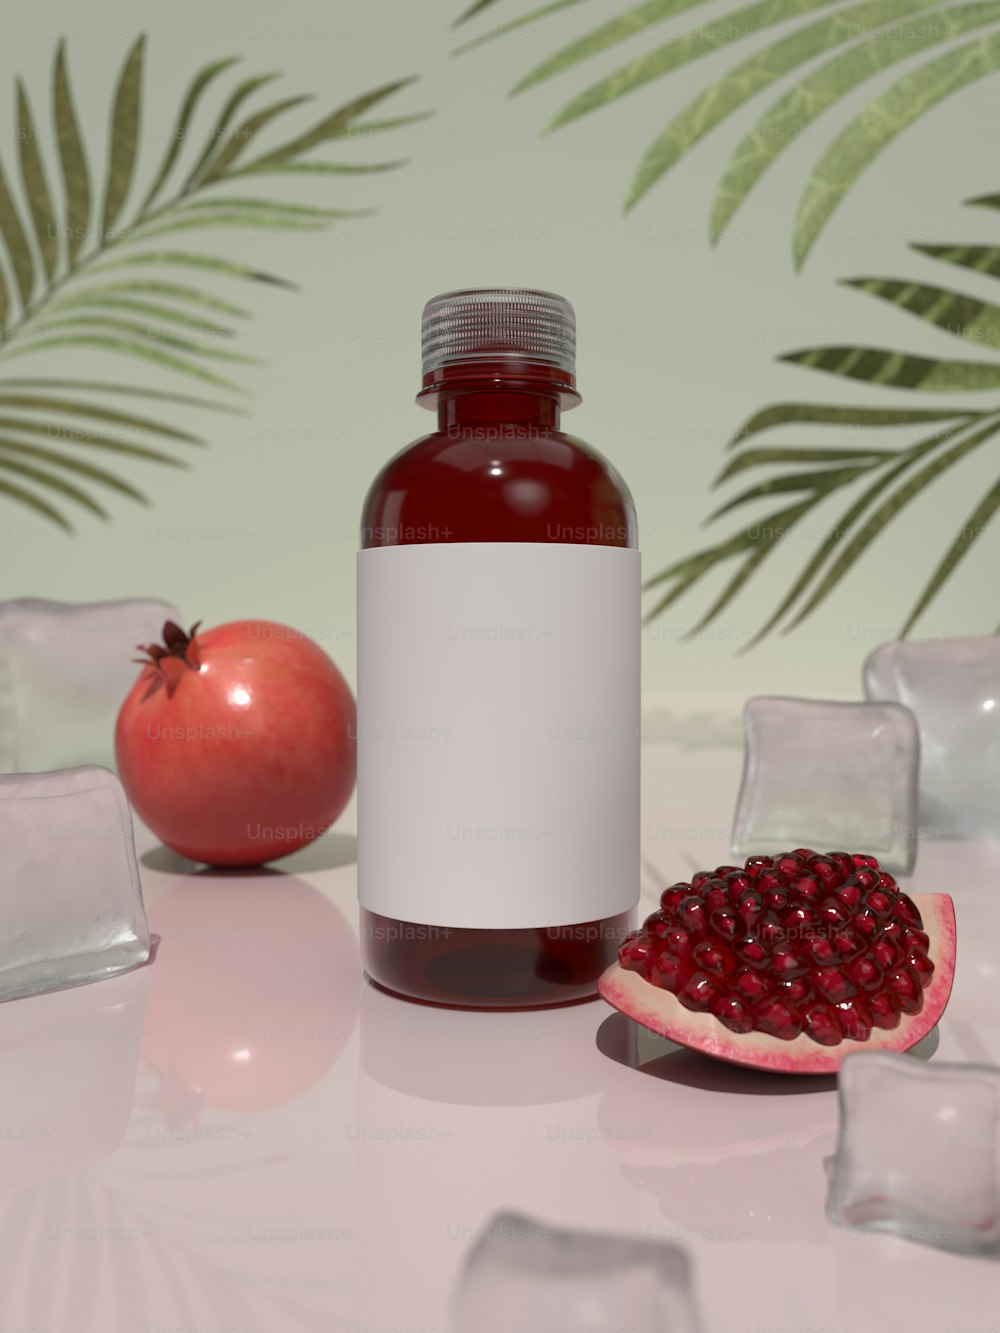 a bottle of pomegranate next to a pomegranate on a